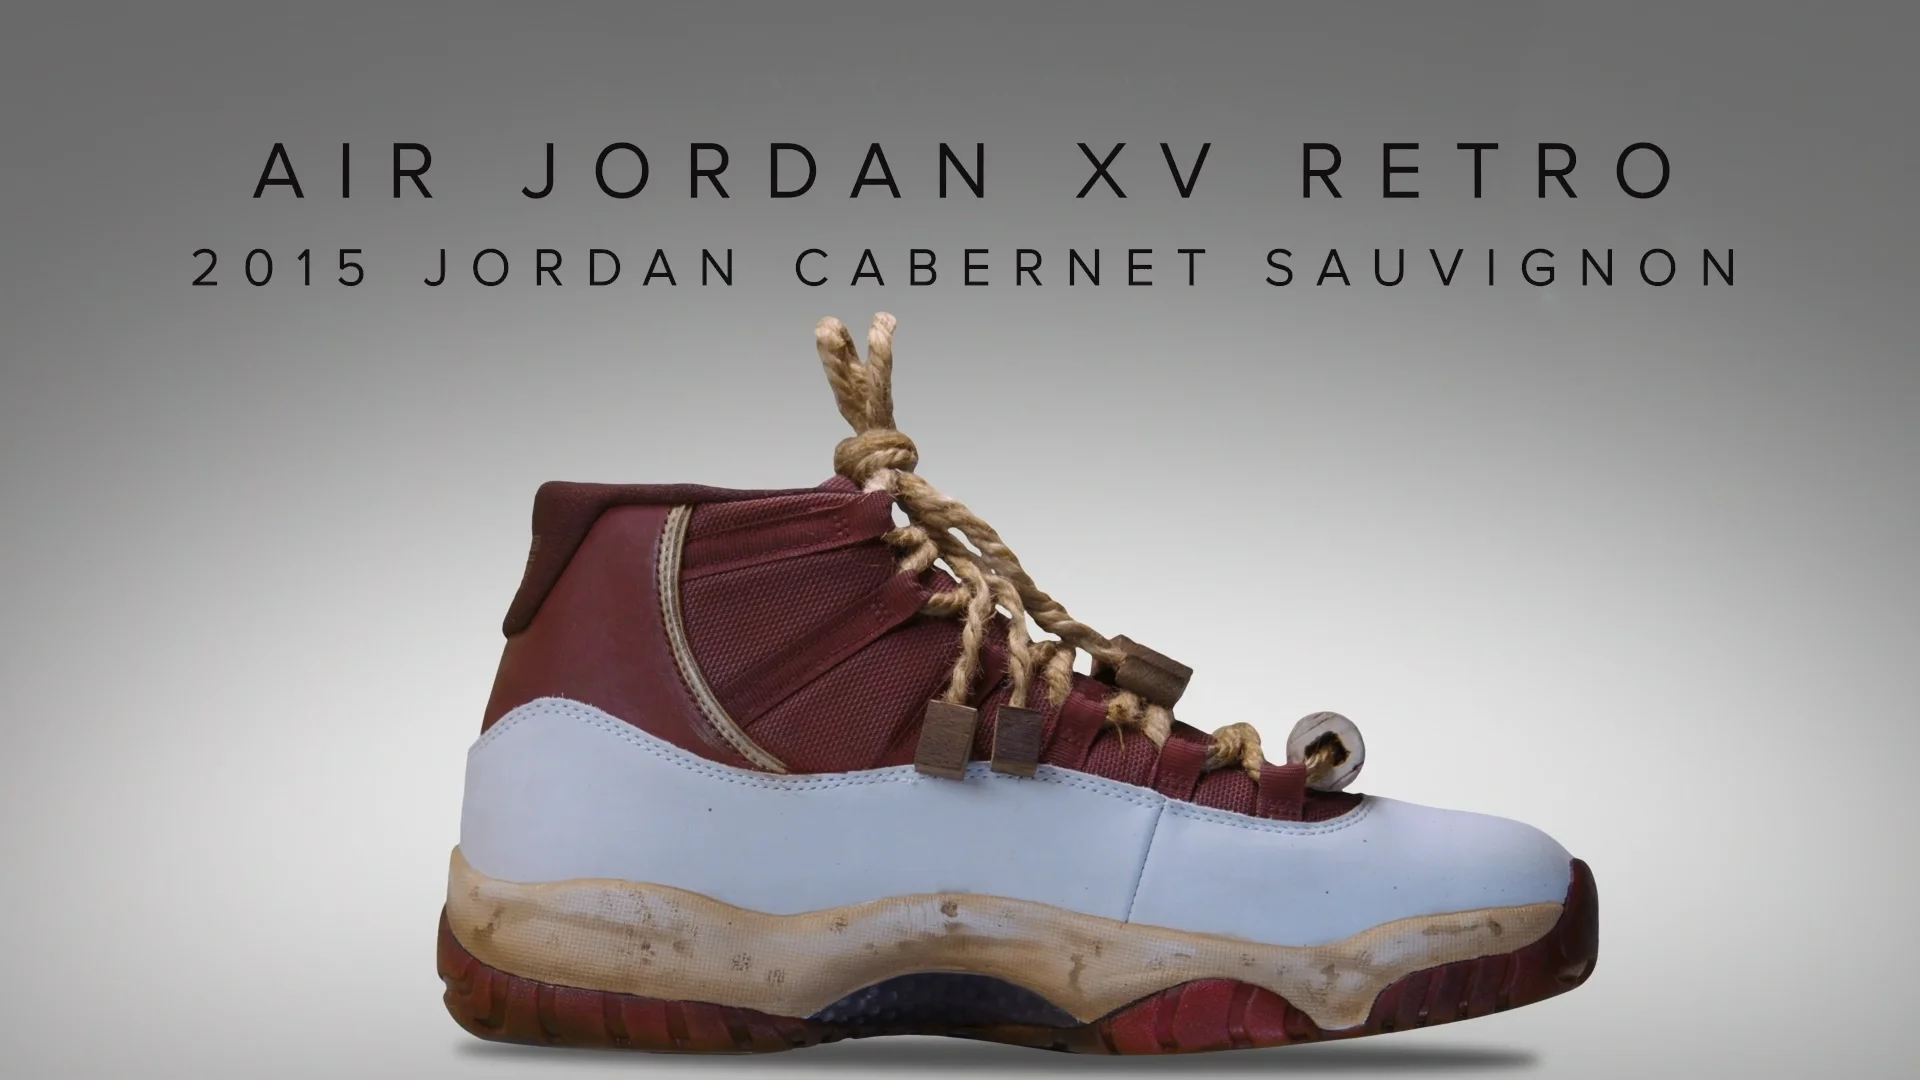 Air Jordan Retro XV 2015 Jordan Cabernet Sauvignon Sneakers